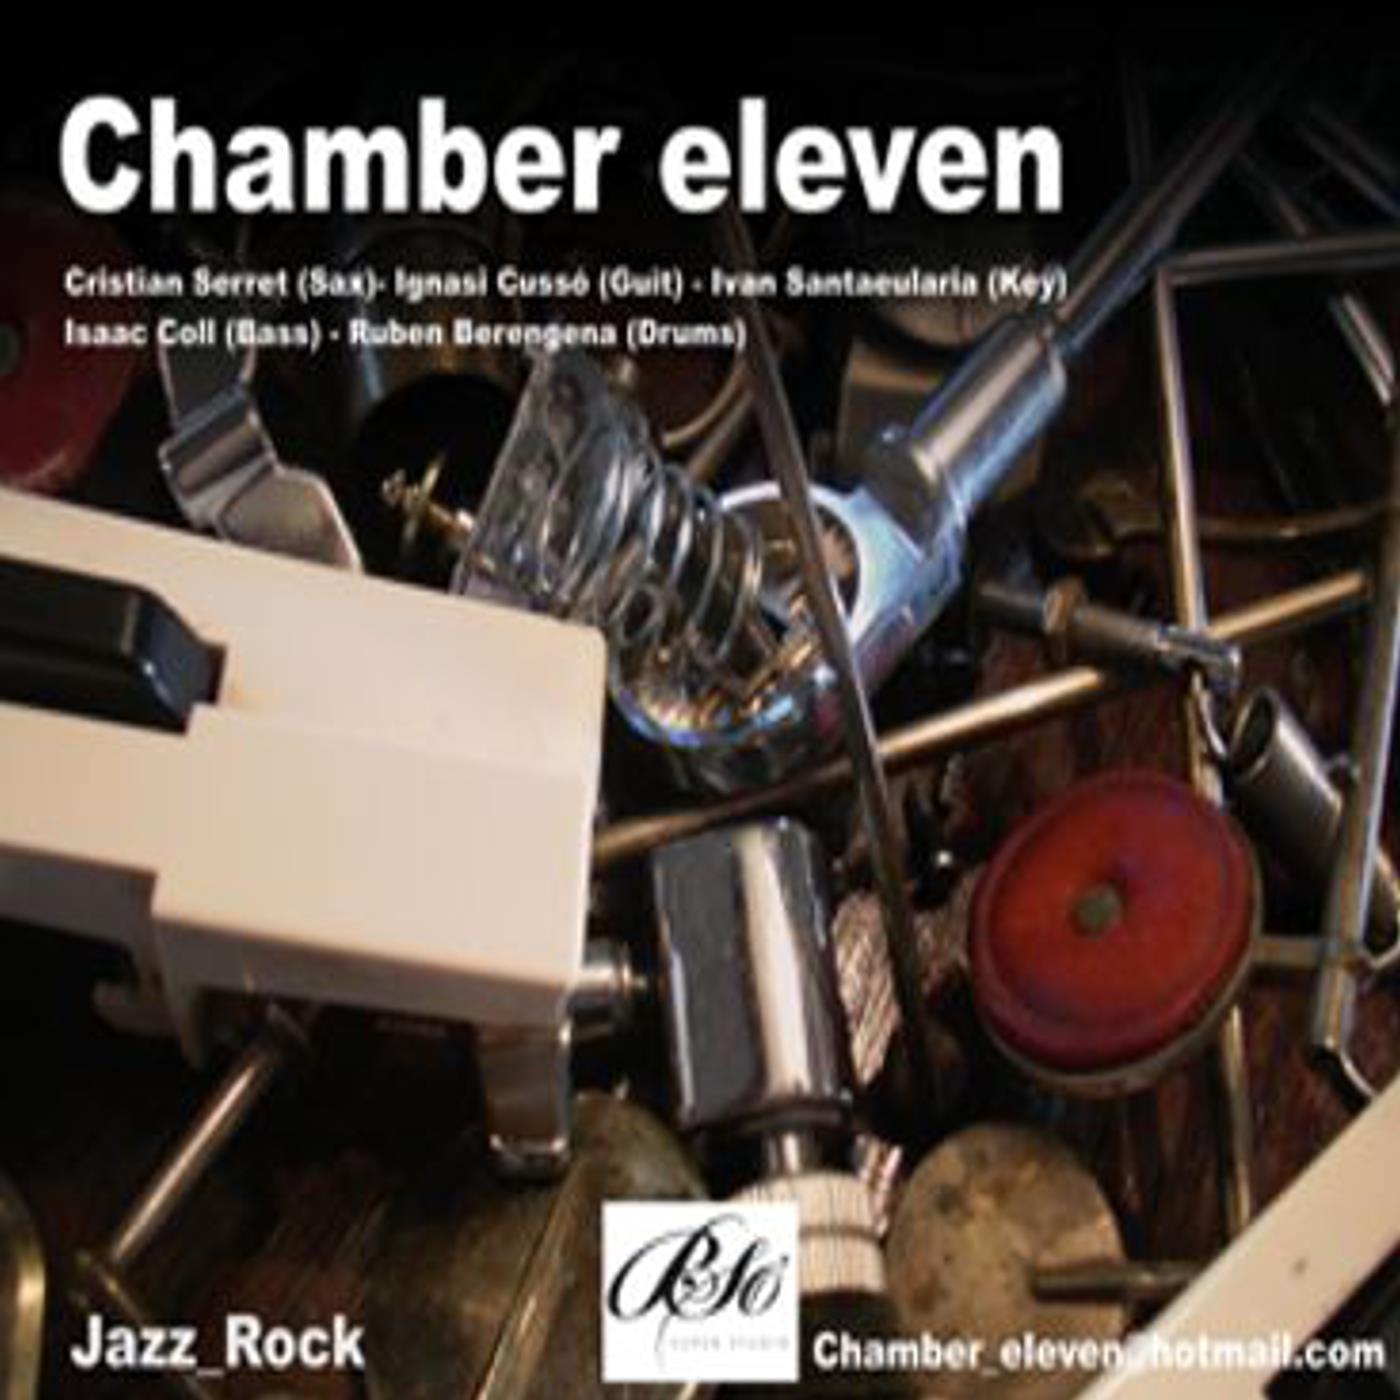 Chamber eleven